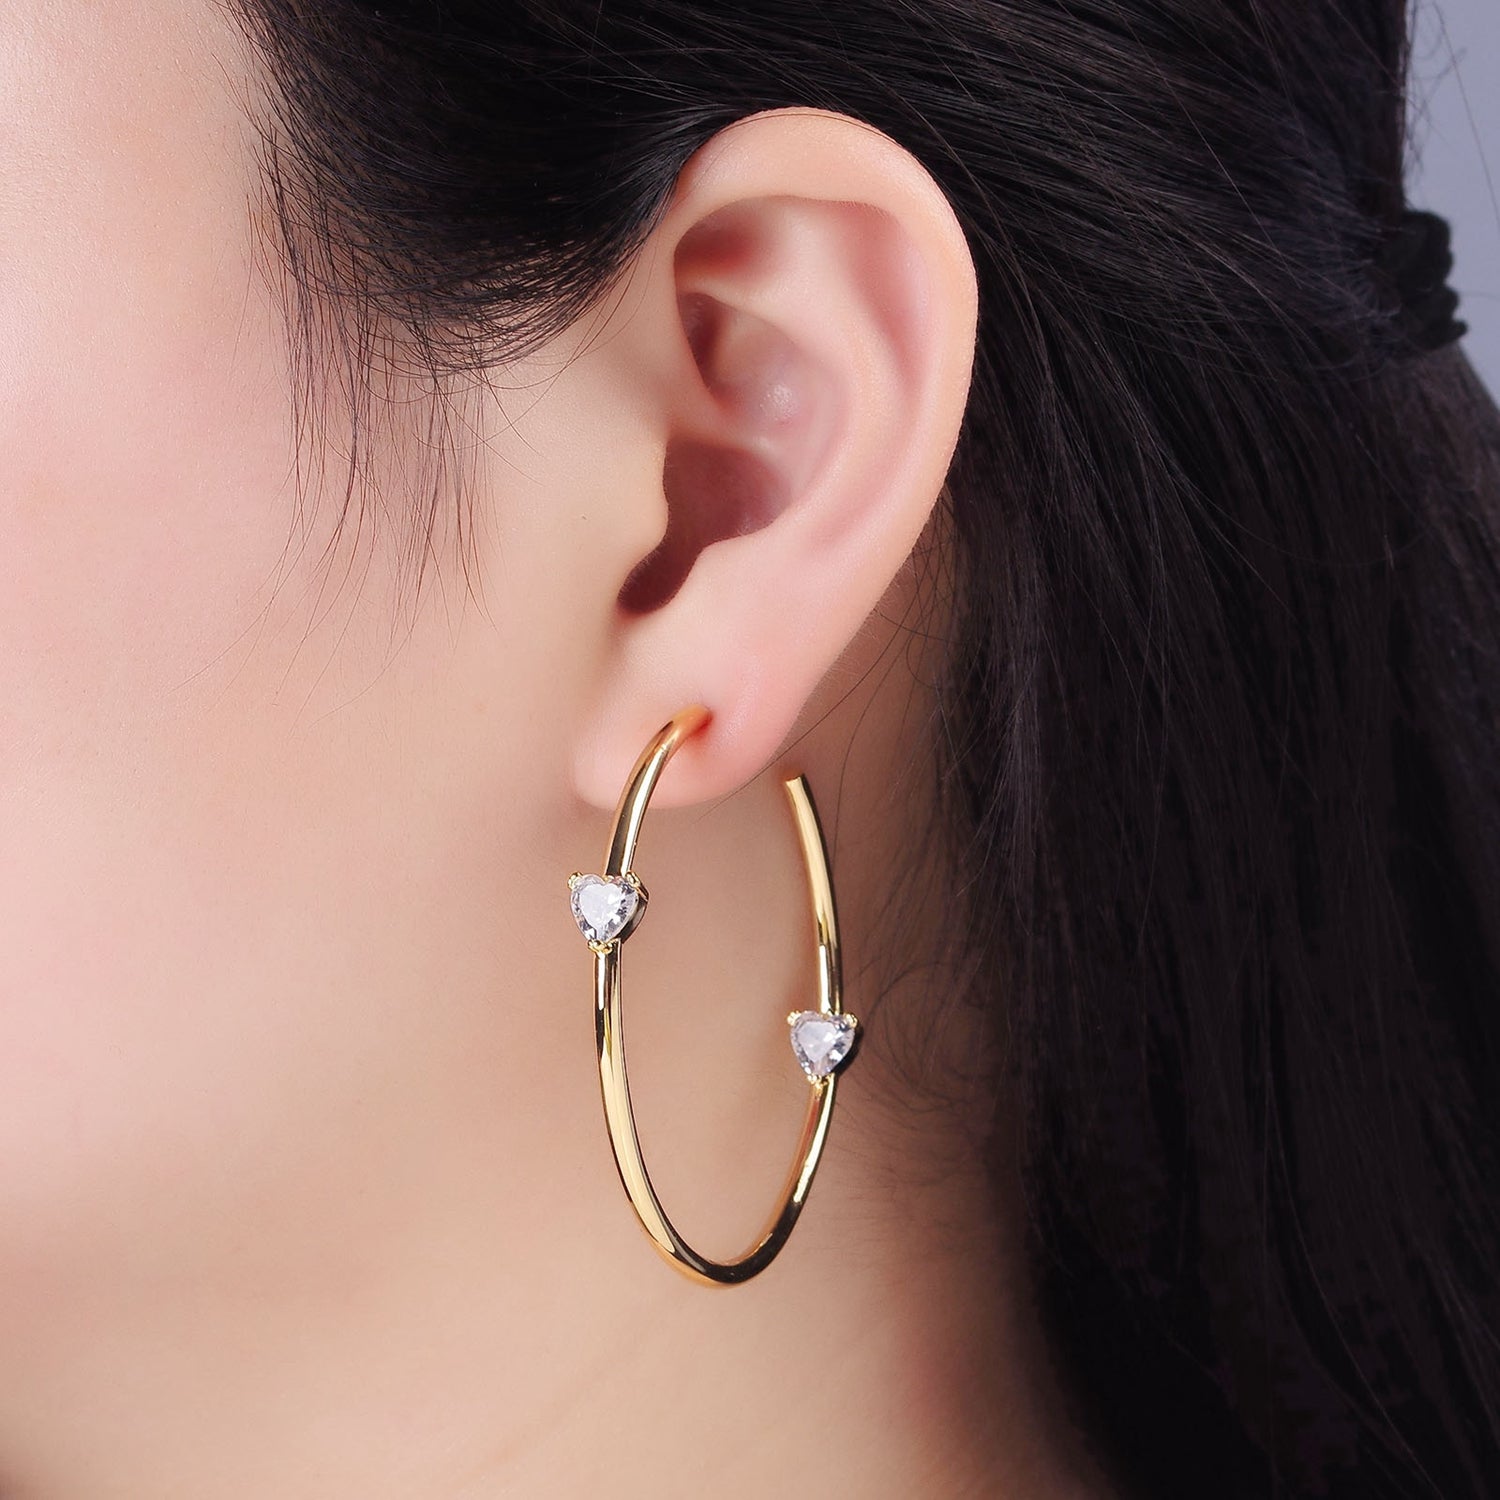 14K Gold Filled Double Heart CZ C-Shaped Hoop Earrings in Gold & Silver | Q069